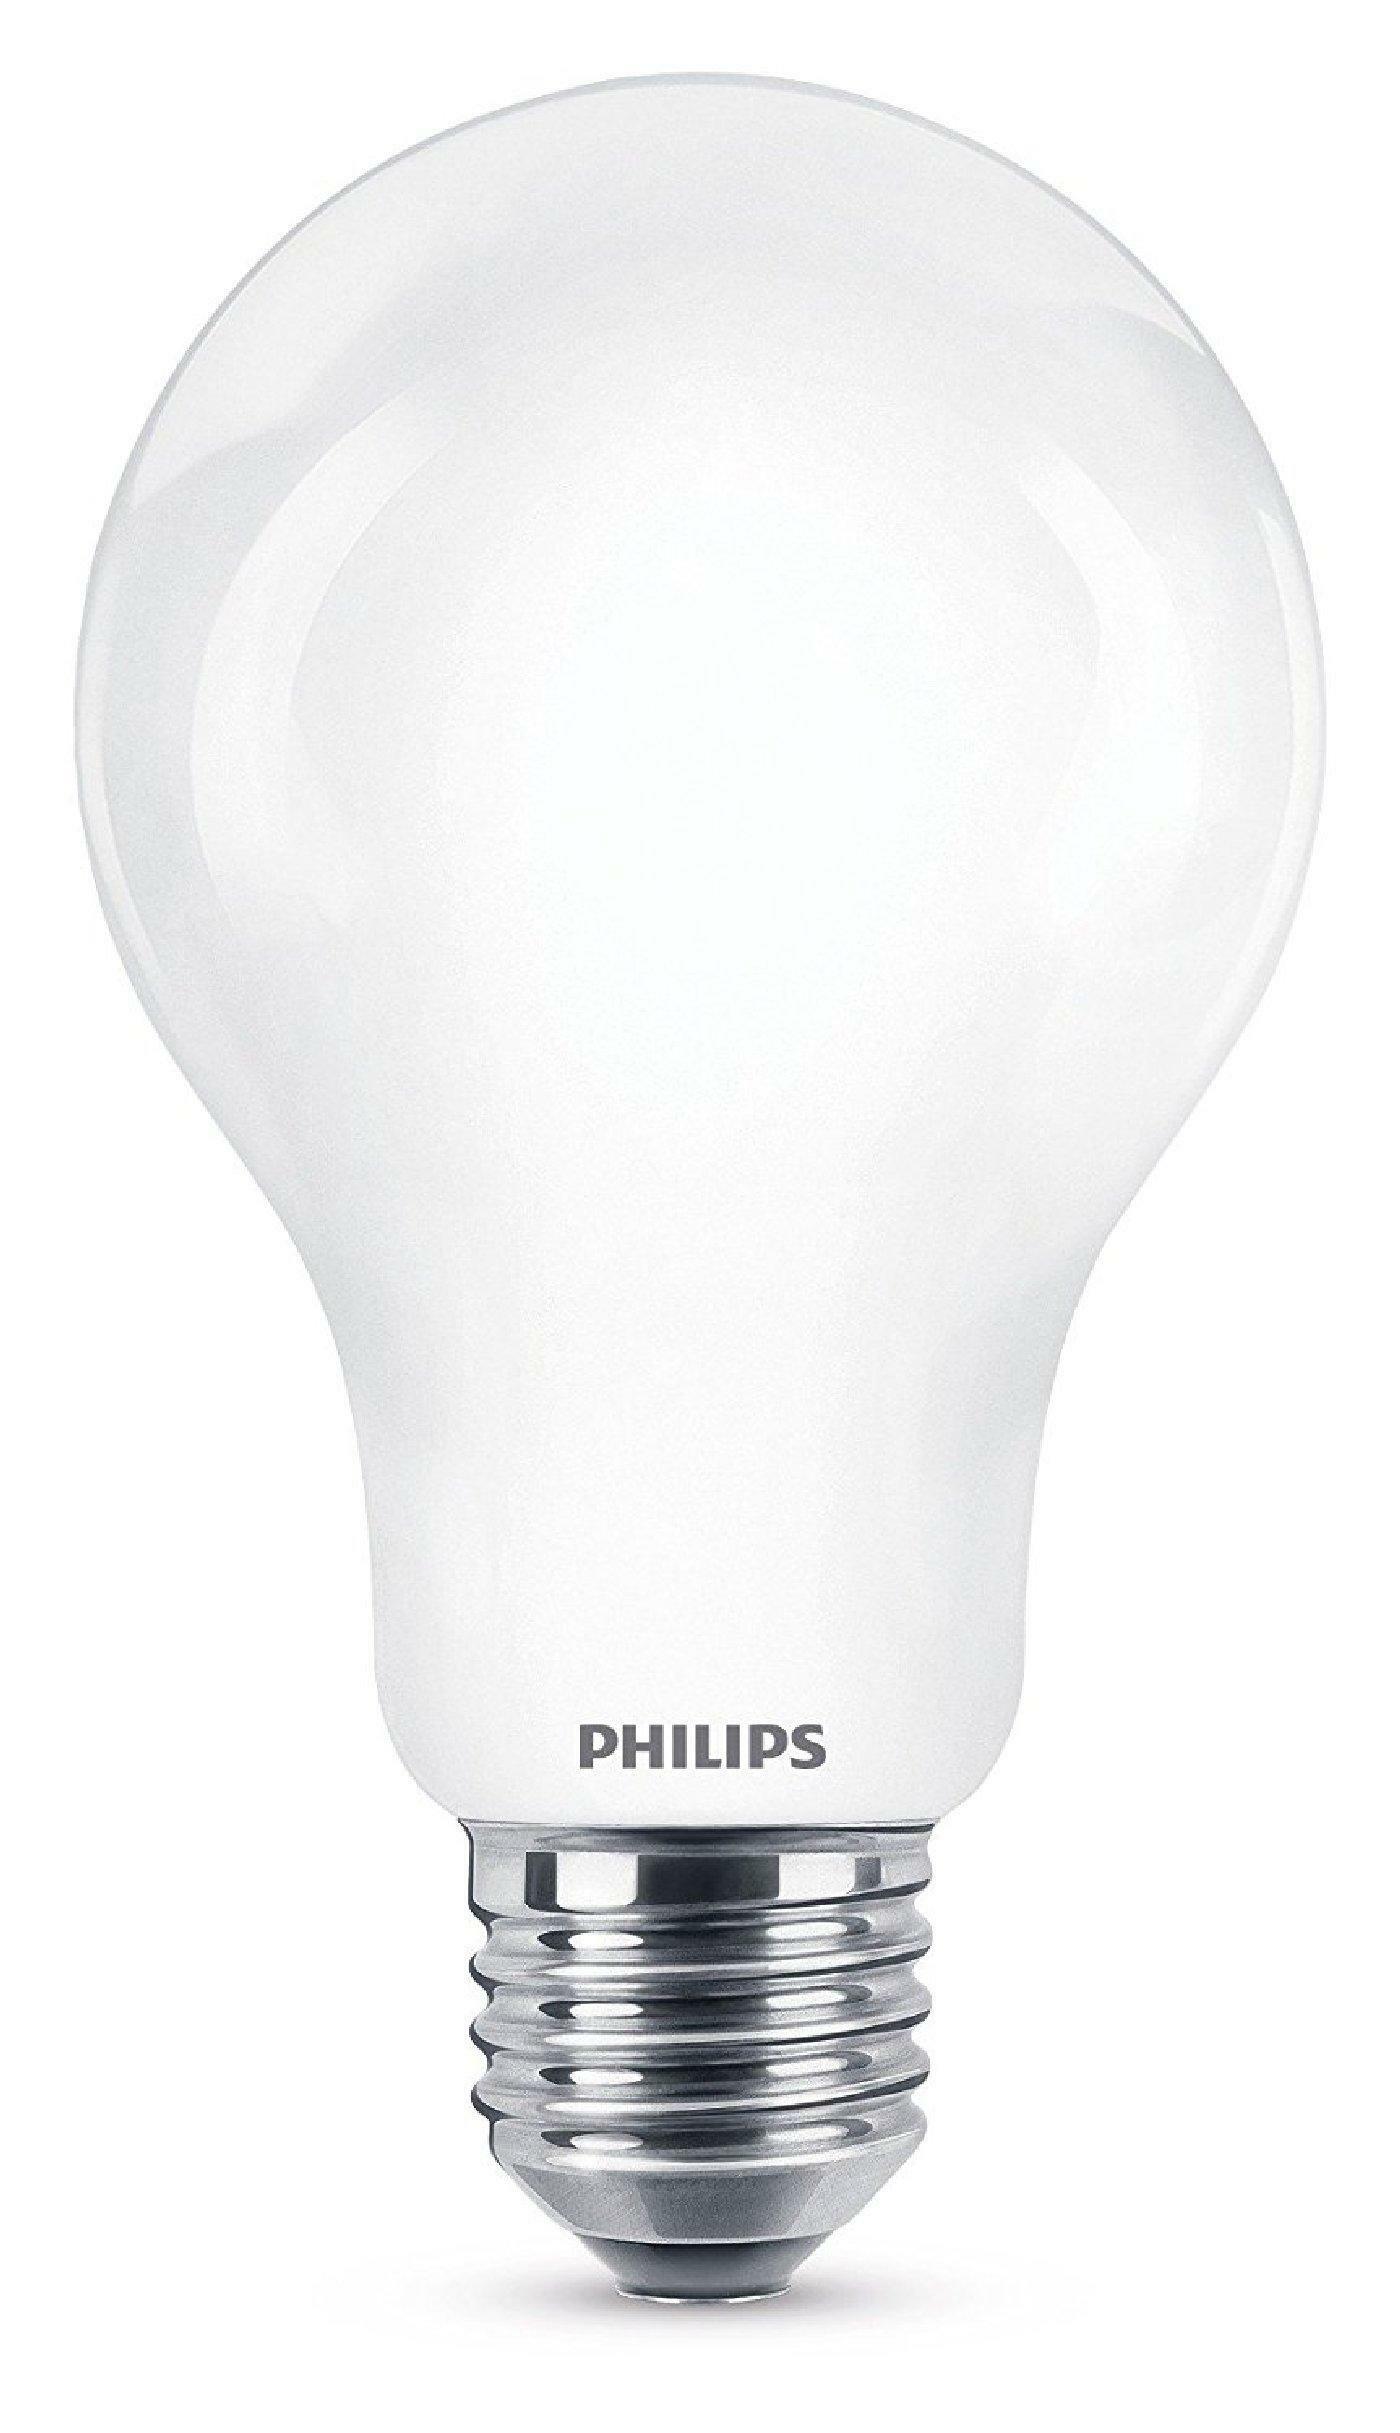 Philips lampade professionali lampadina led led classic 100w a67 ww fr nd  1ct/1 incaled risparmio energetico incaled100